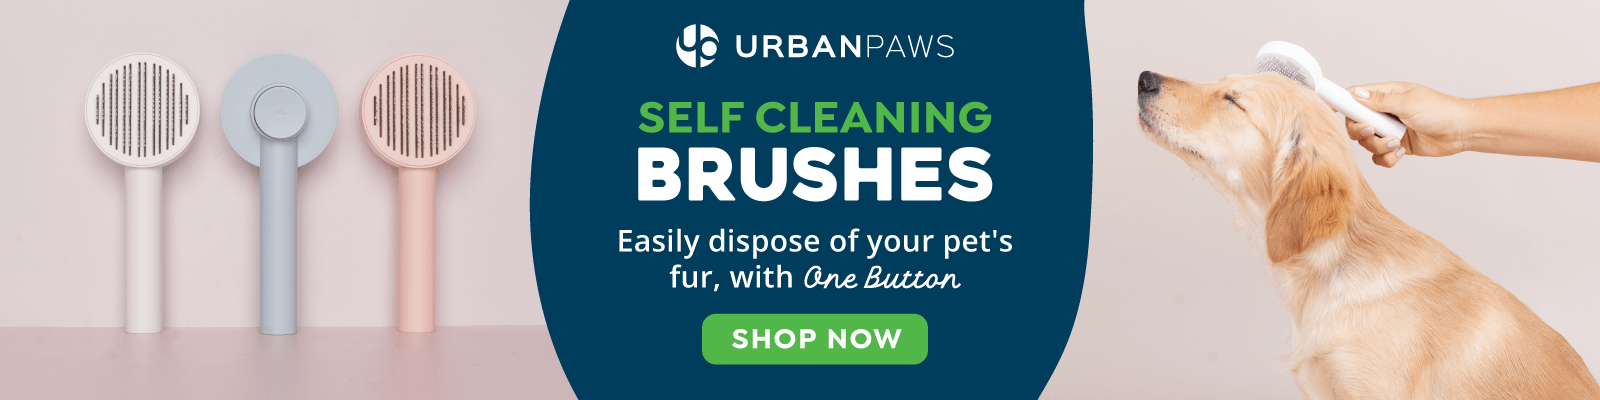 Urbanpaws Brushes